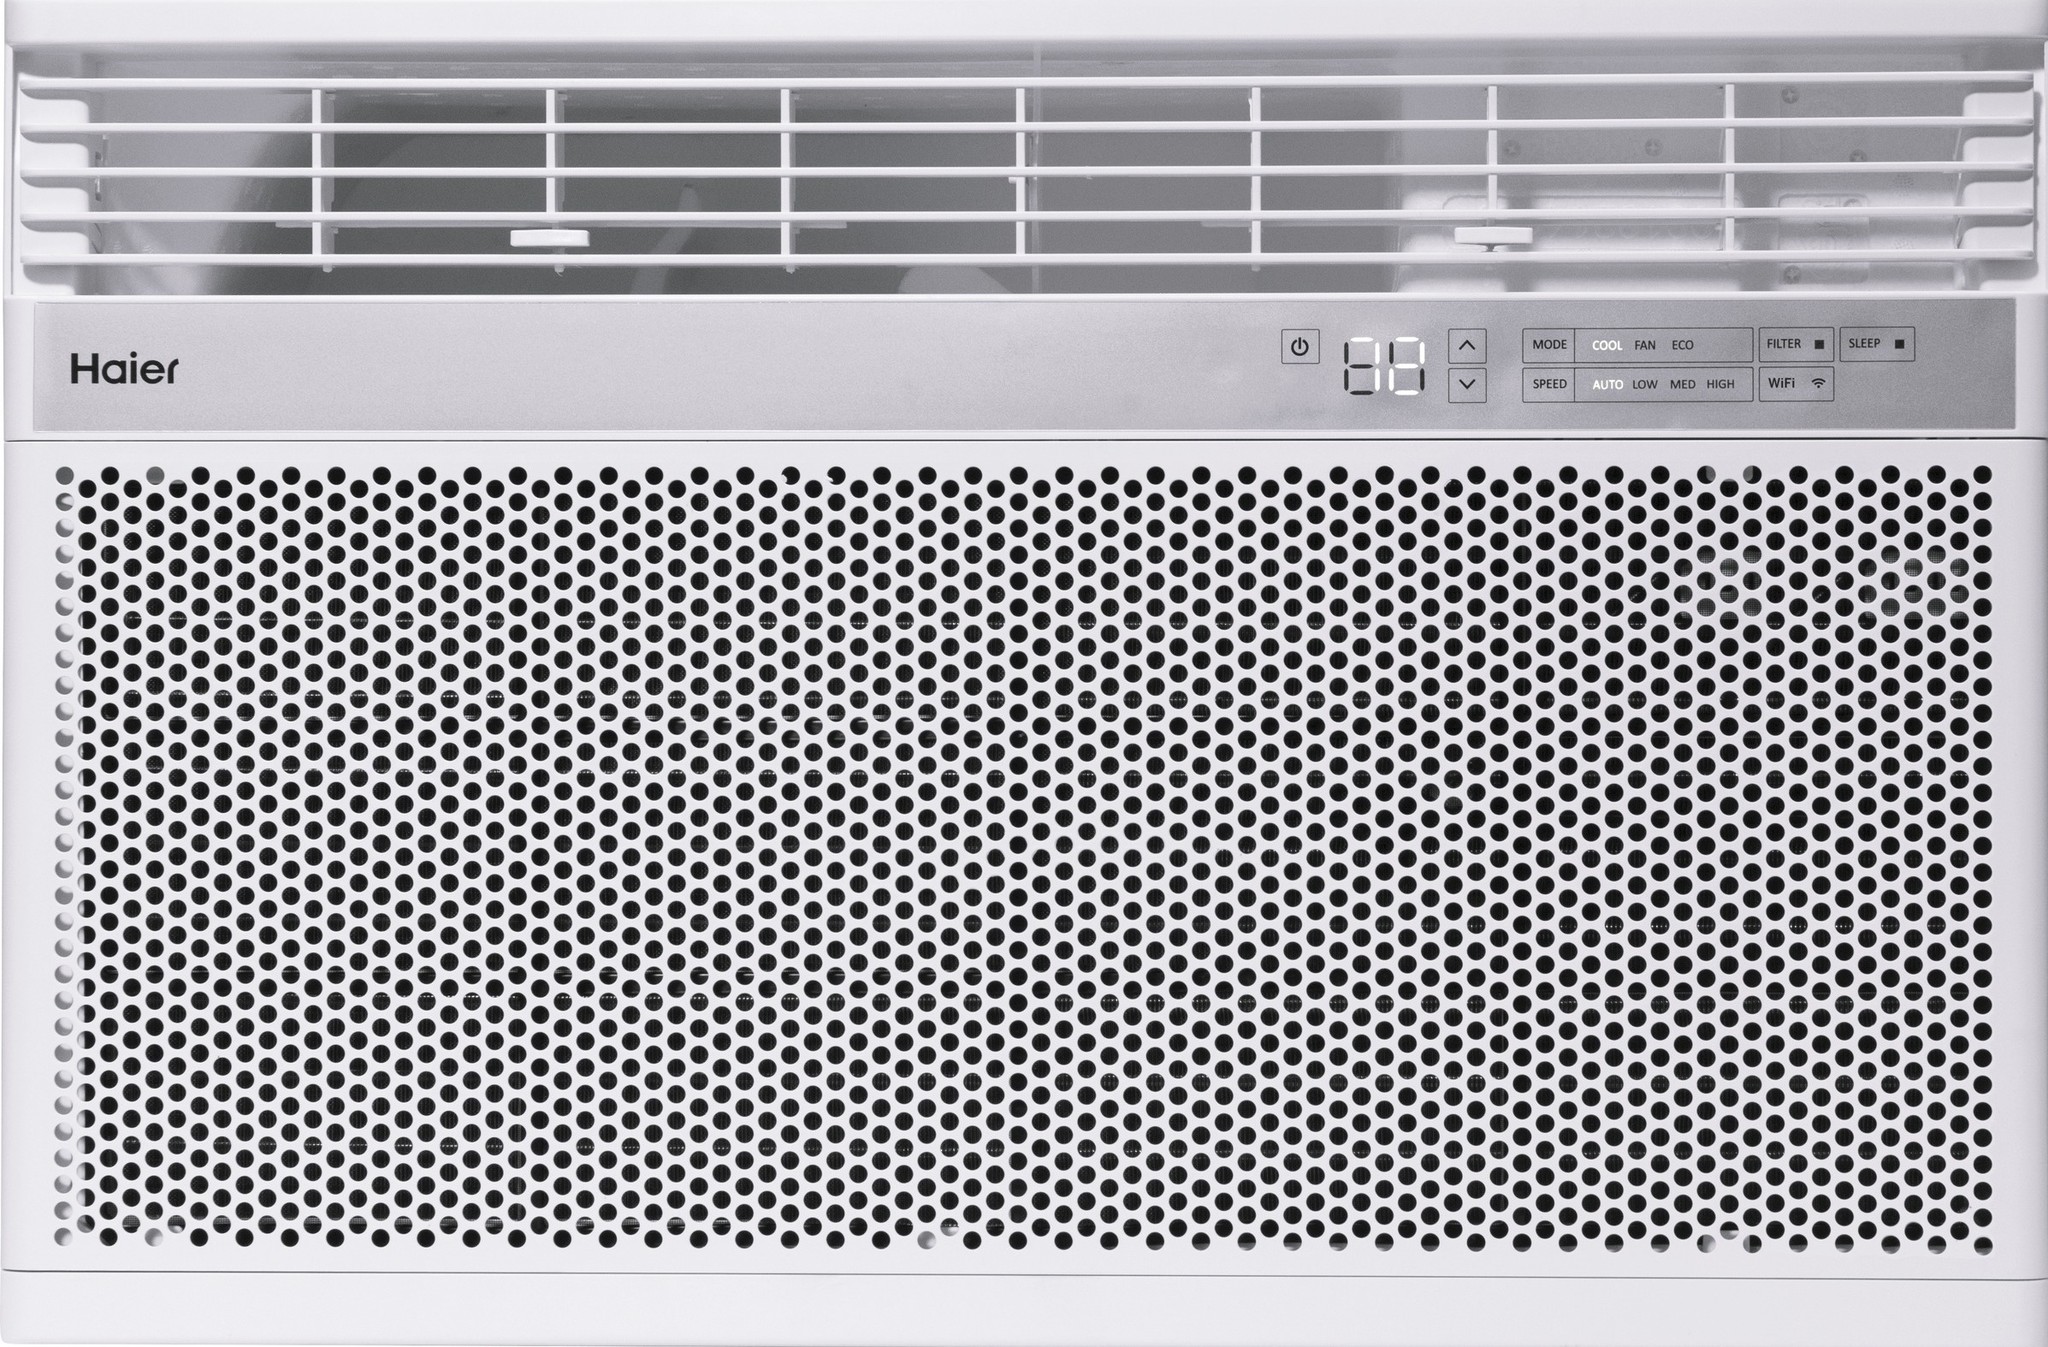 Haier QHC15AX window air conditioner on a white background